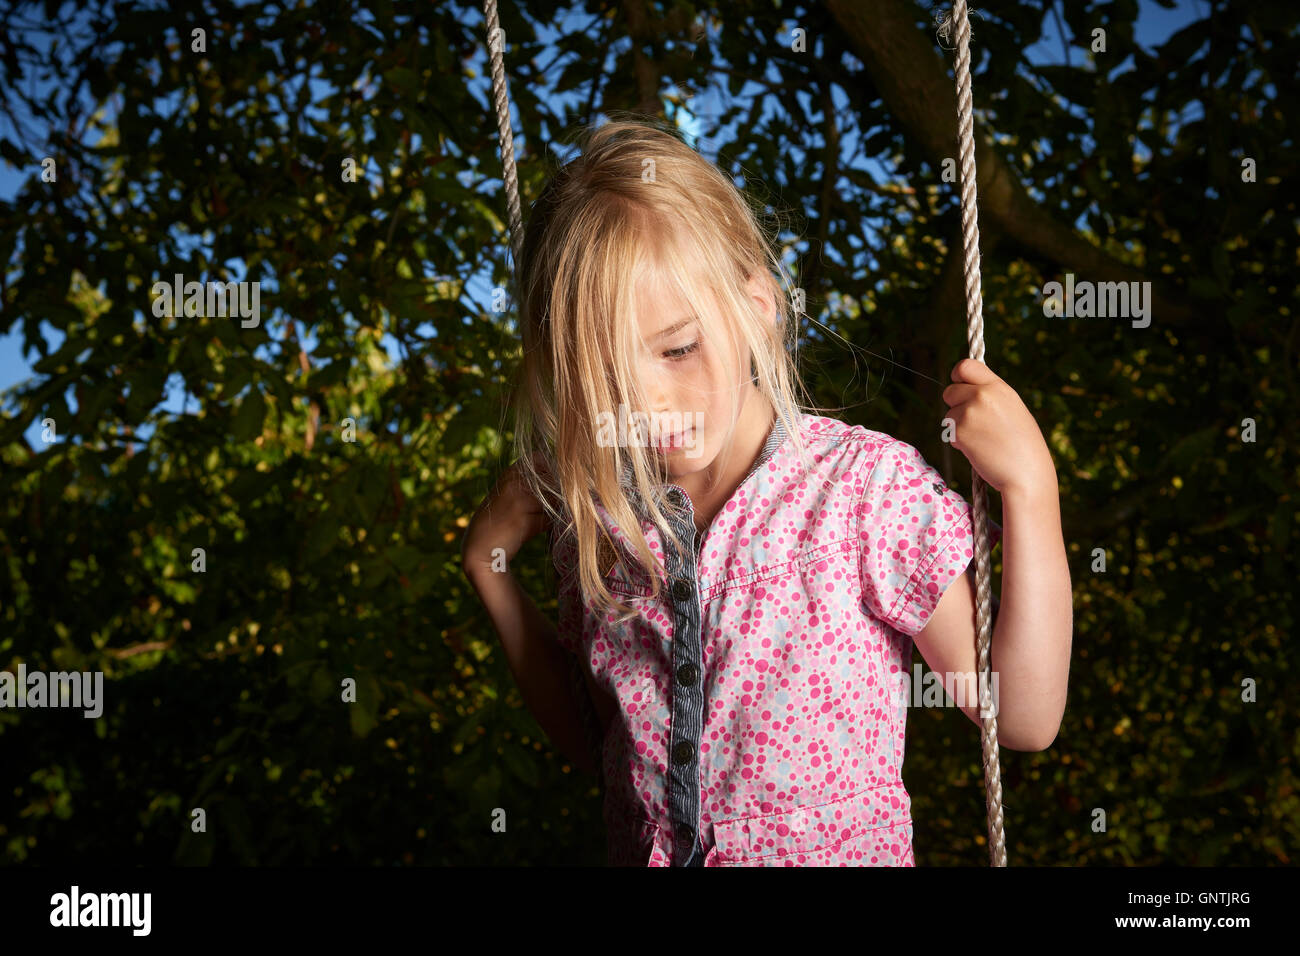 Child blond sad girl standing on swing. Stock Photo